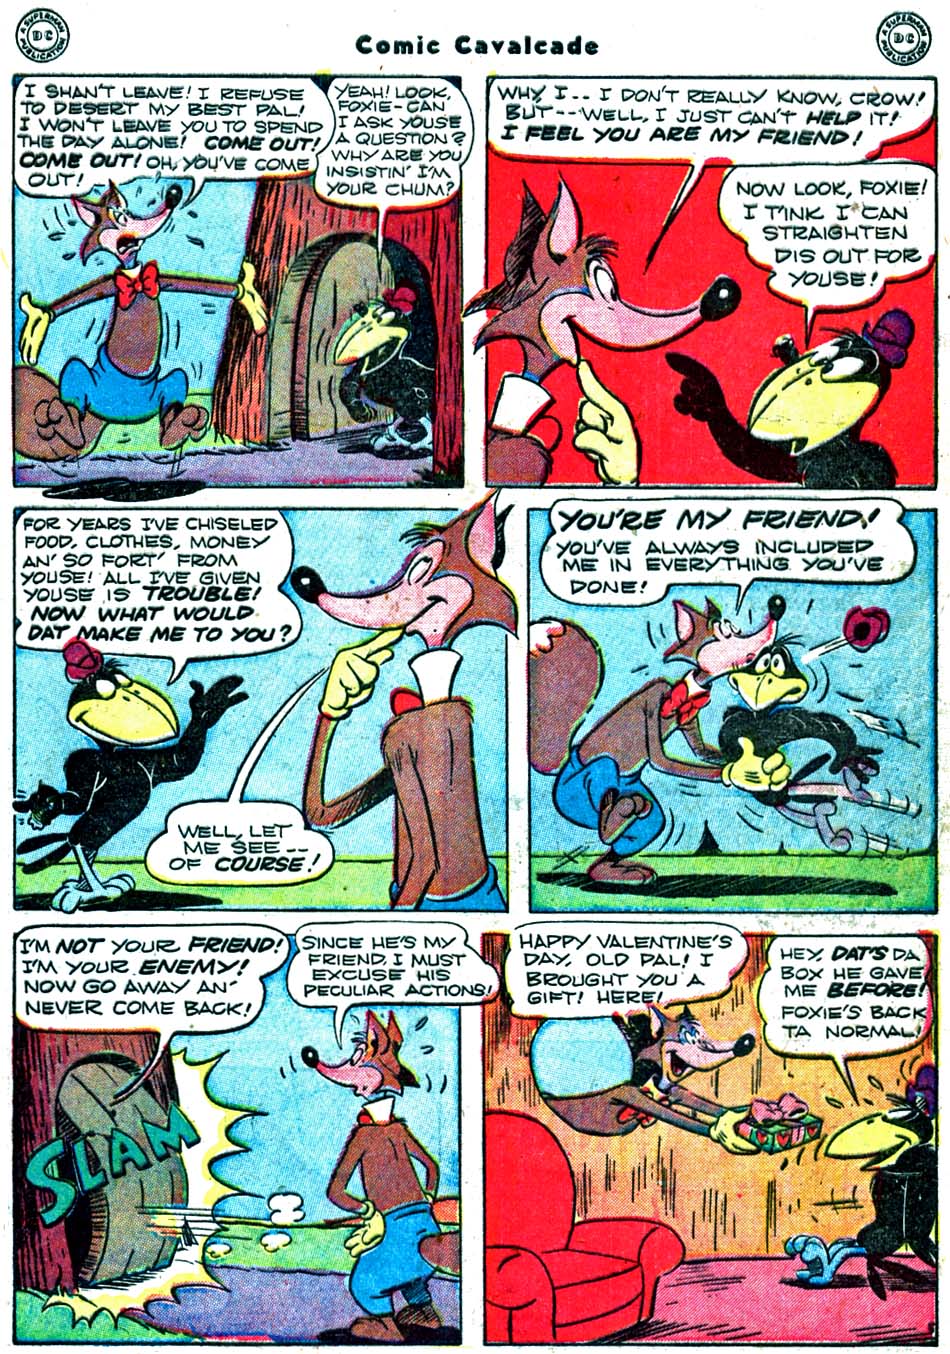 Comic Cavalcade issue 32 - Page 7